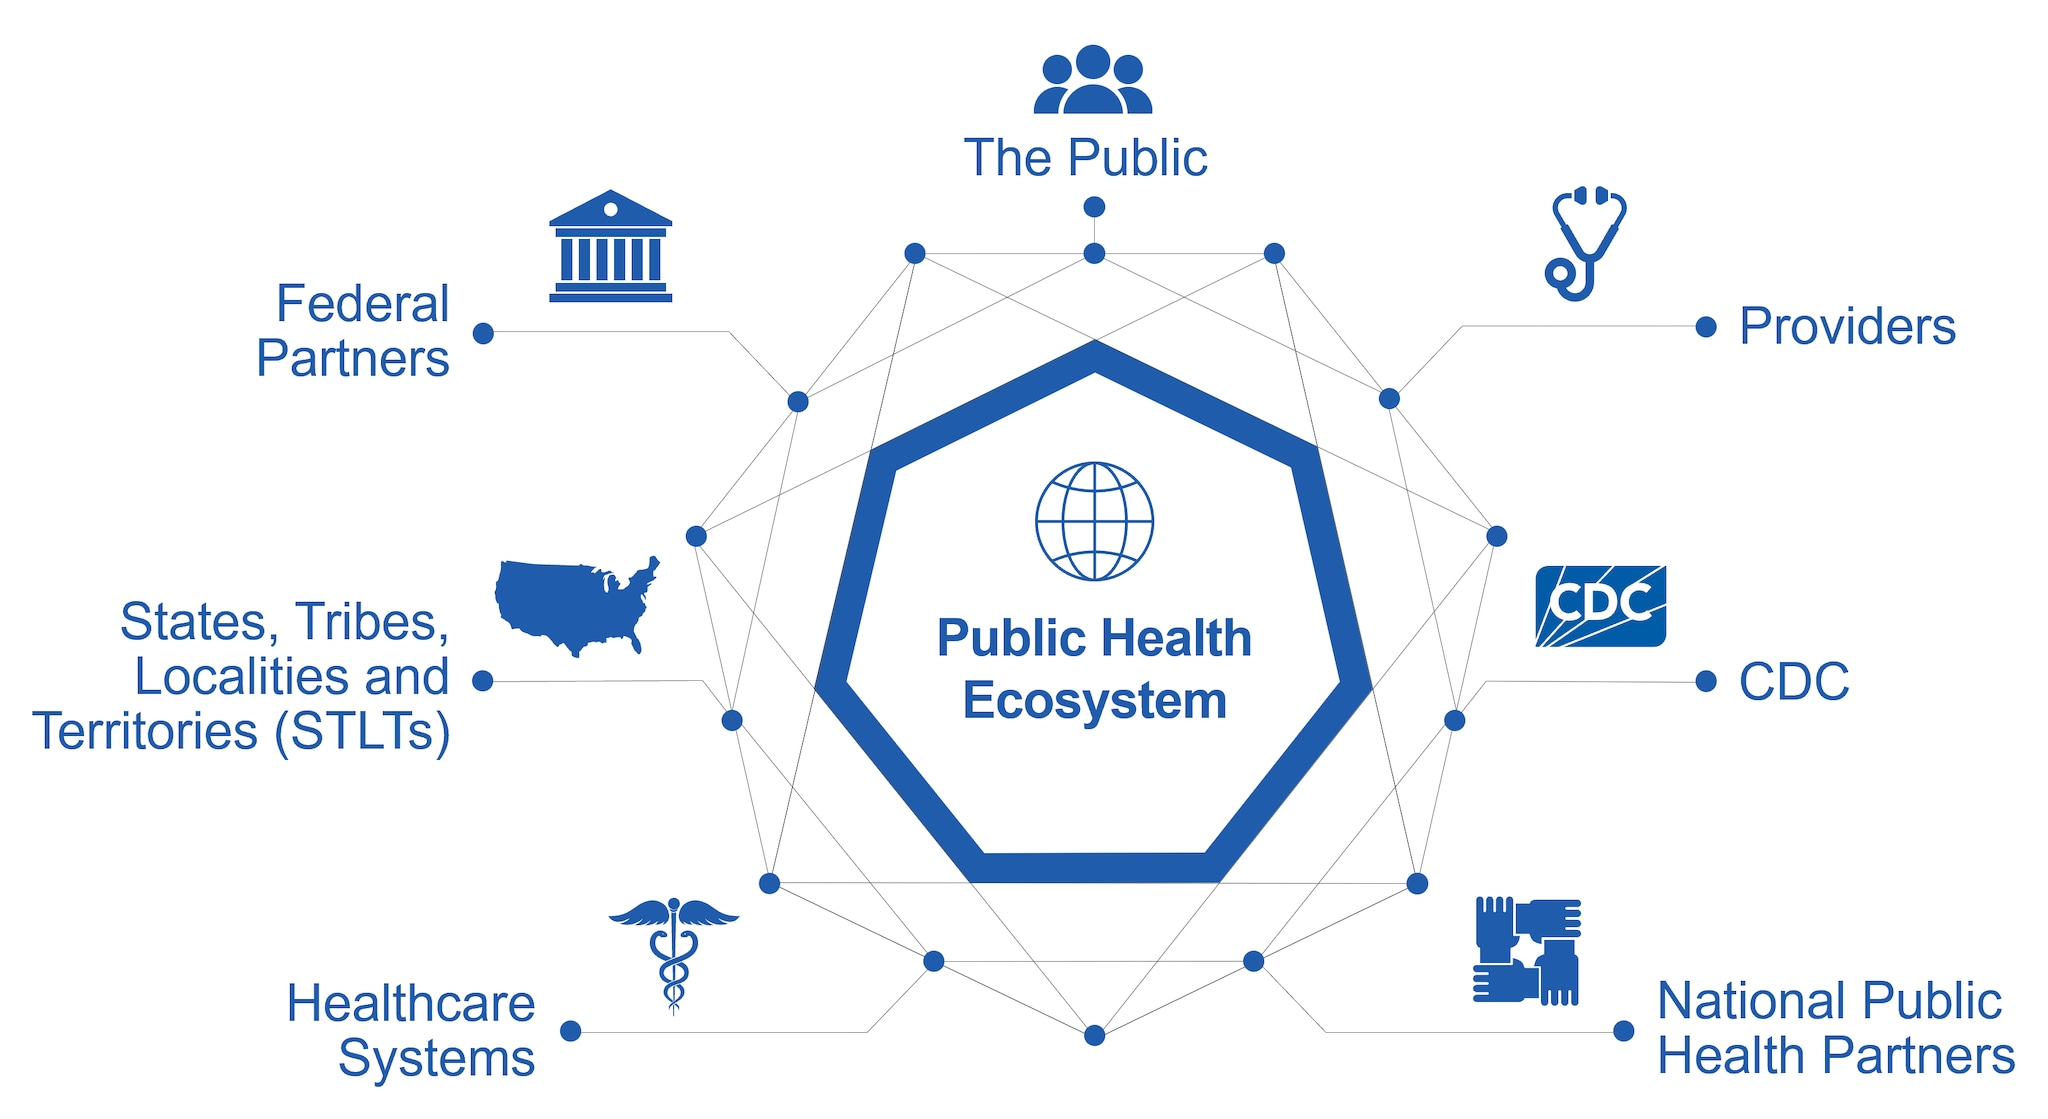 The Public Health Ecosystem has seven components.